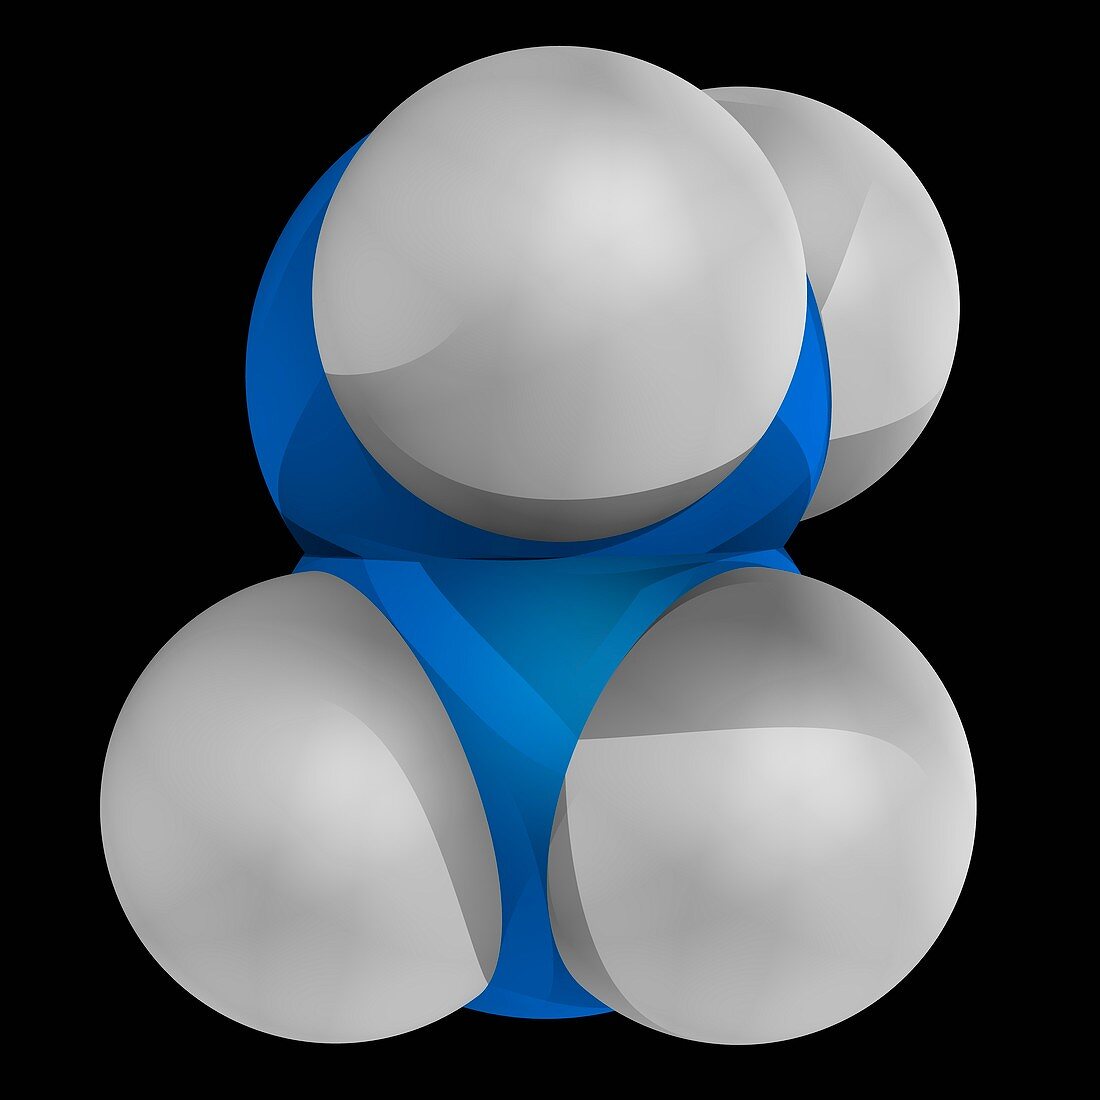 Hydrazine molecule